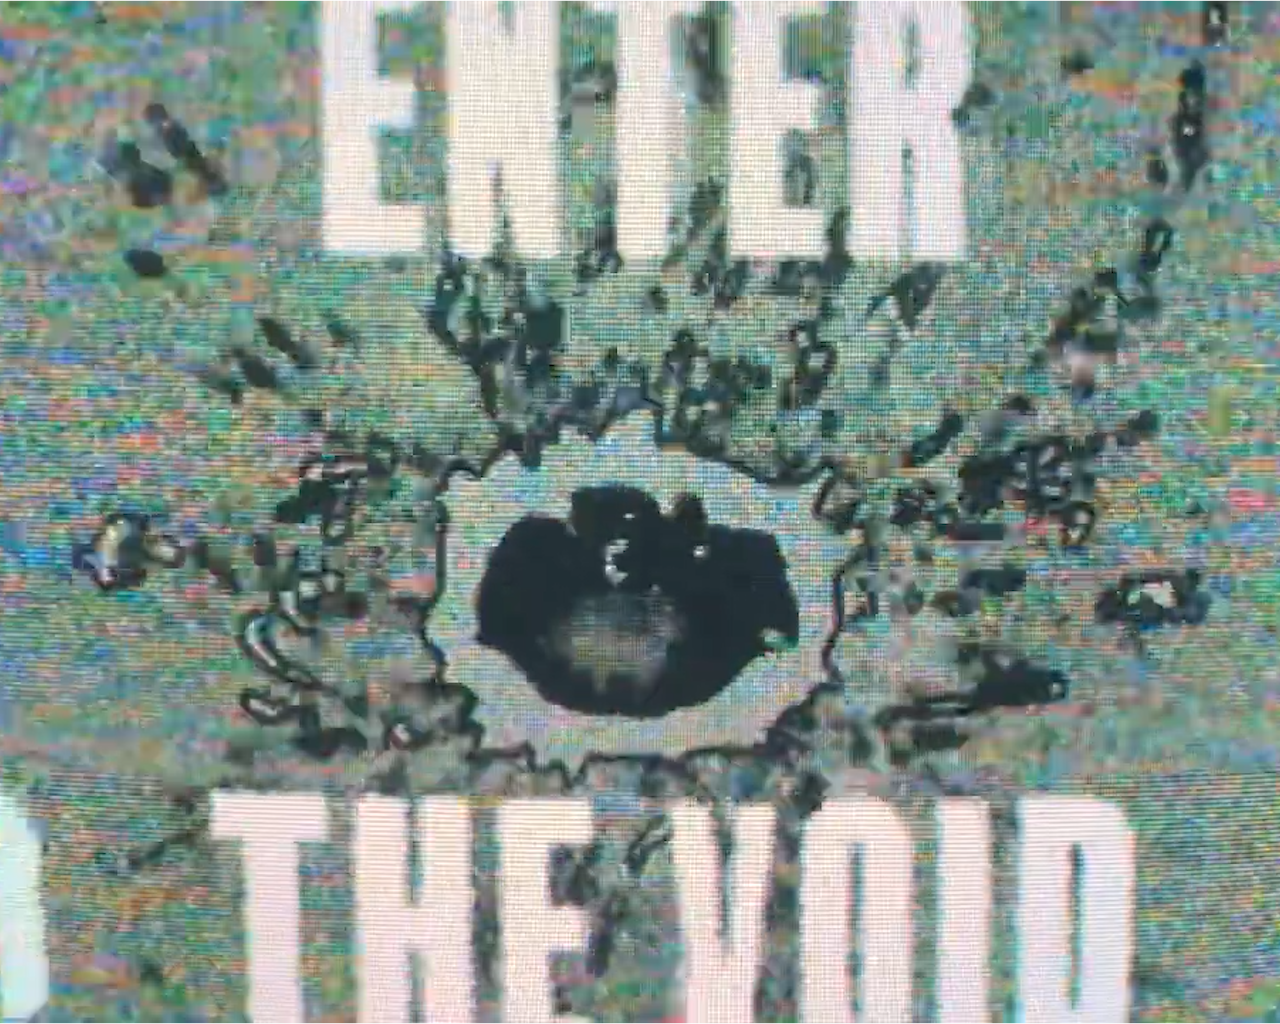 Enter-the-void-snippet.00_00_11_06.Still005